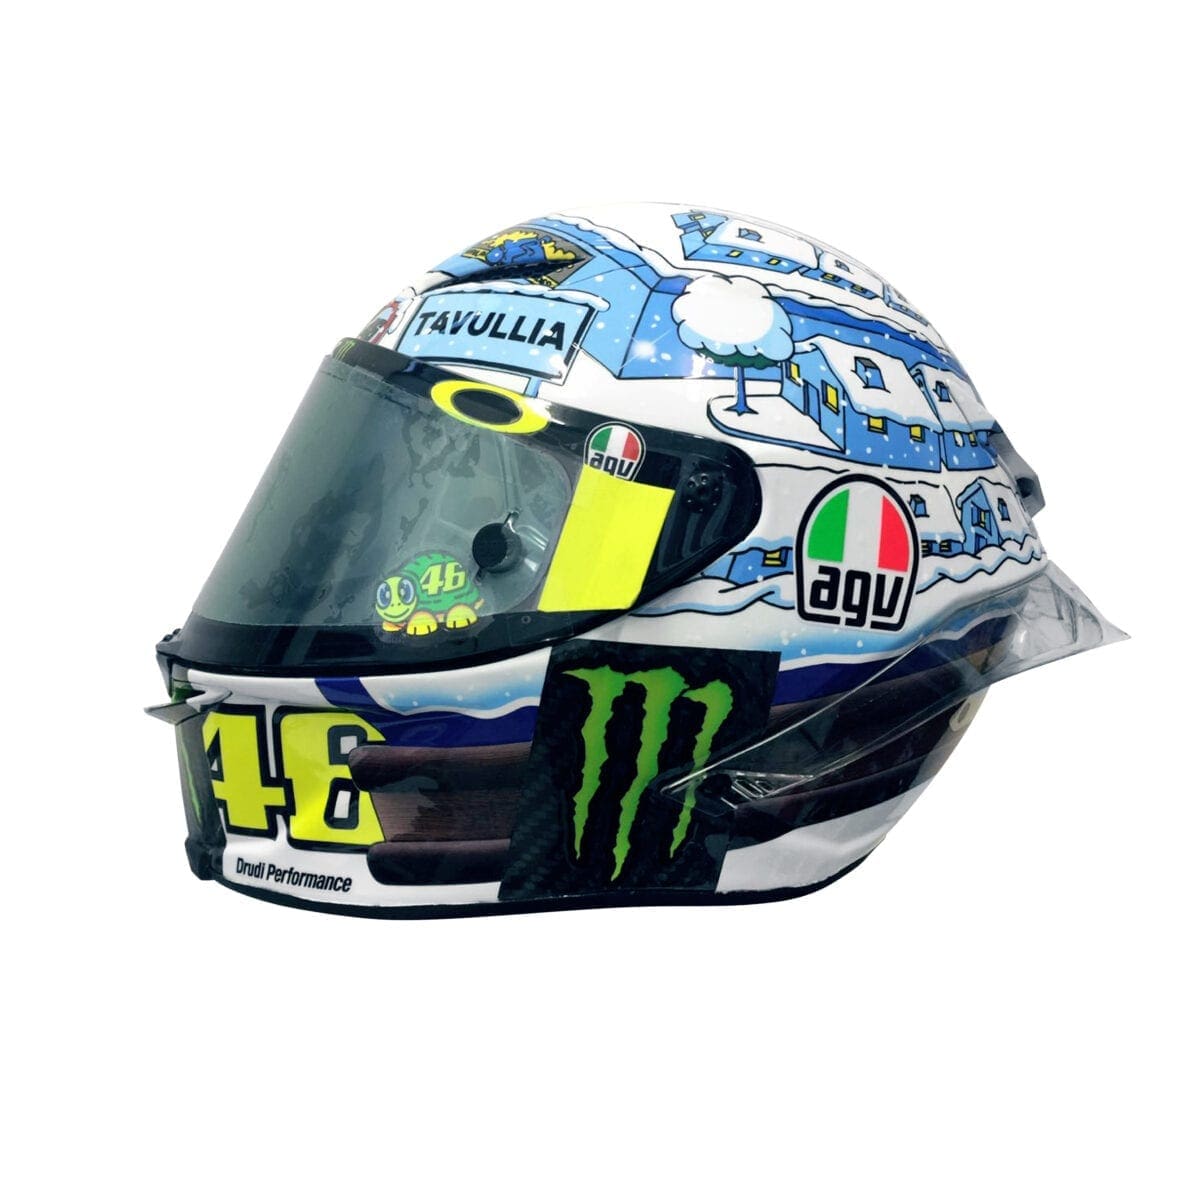 Valentino Rossi unveils new helmet design at winter tests